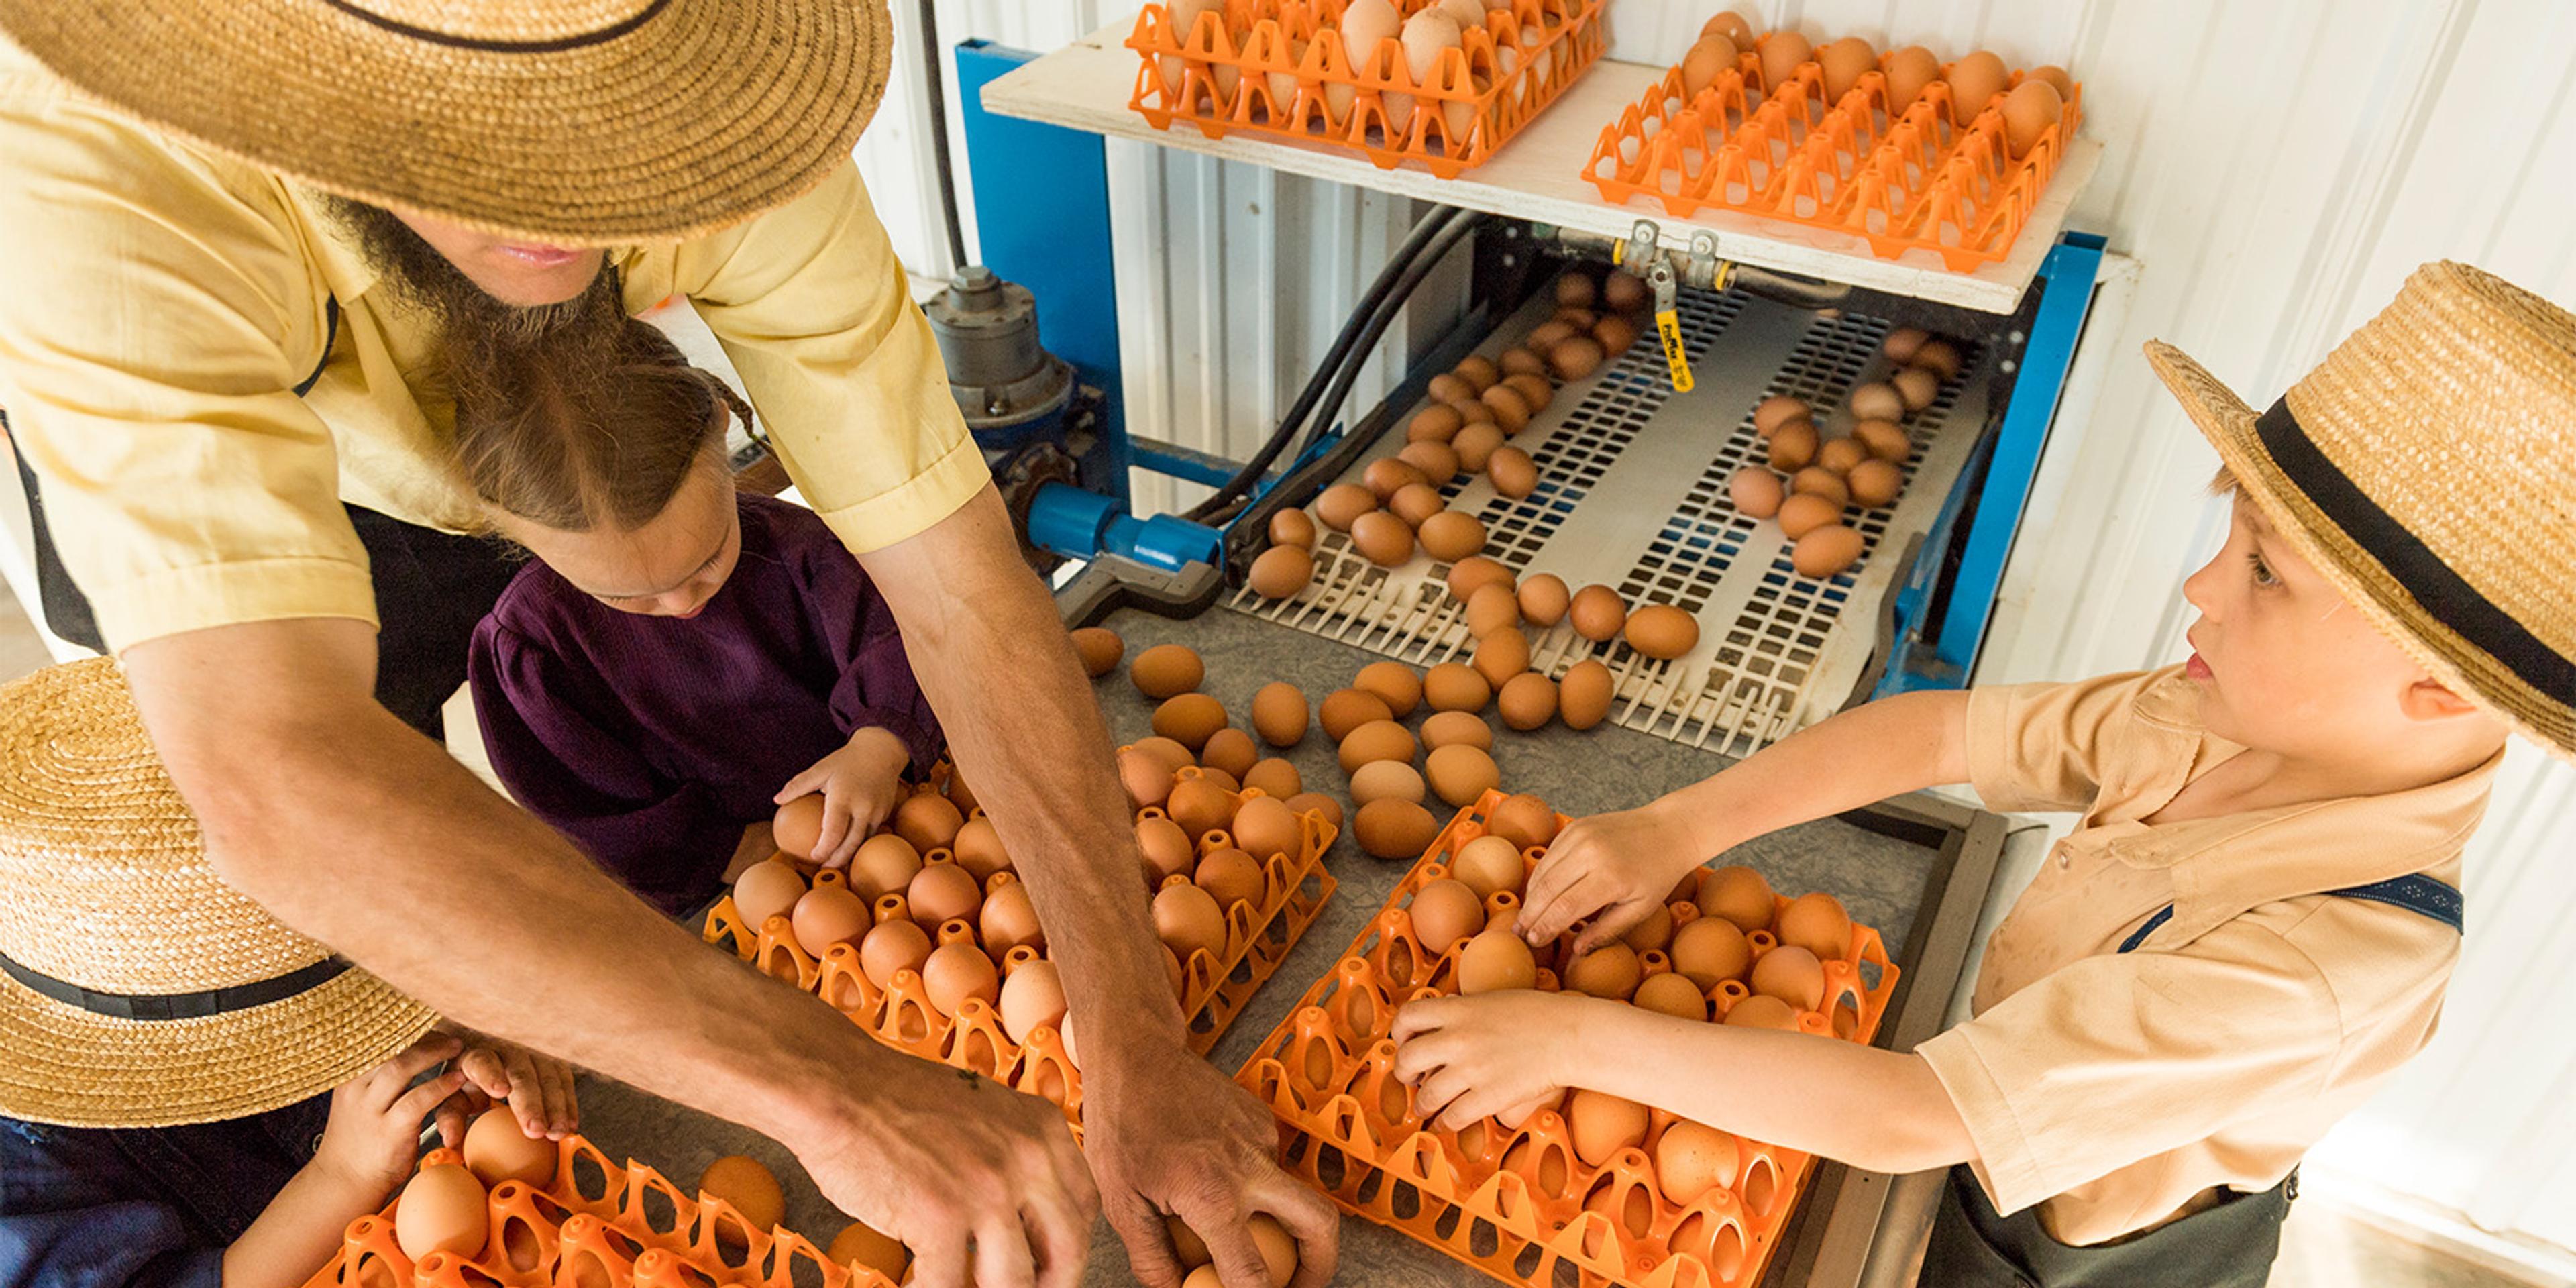 The Glick family puts organic eggs into crates at their Pennsylvania farm.